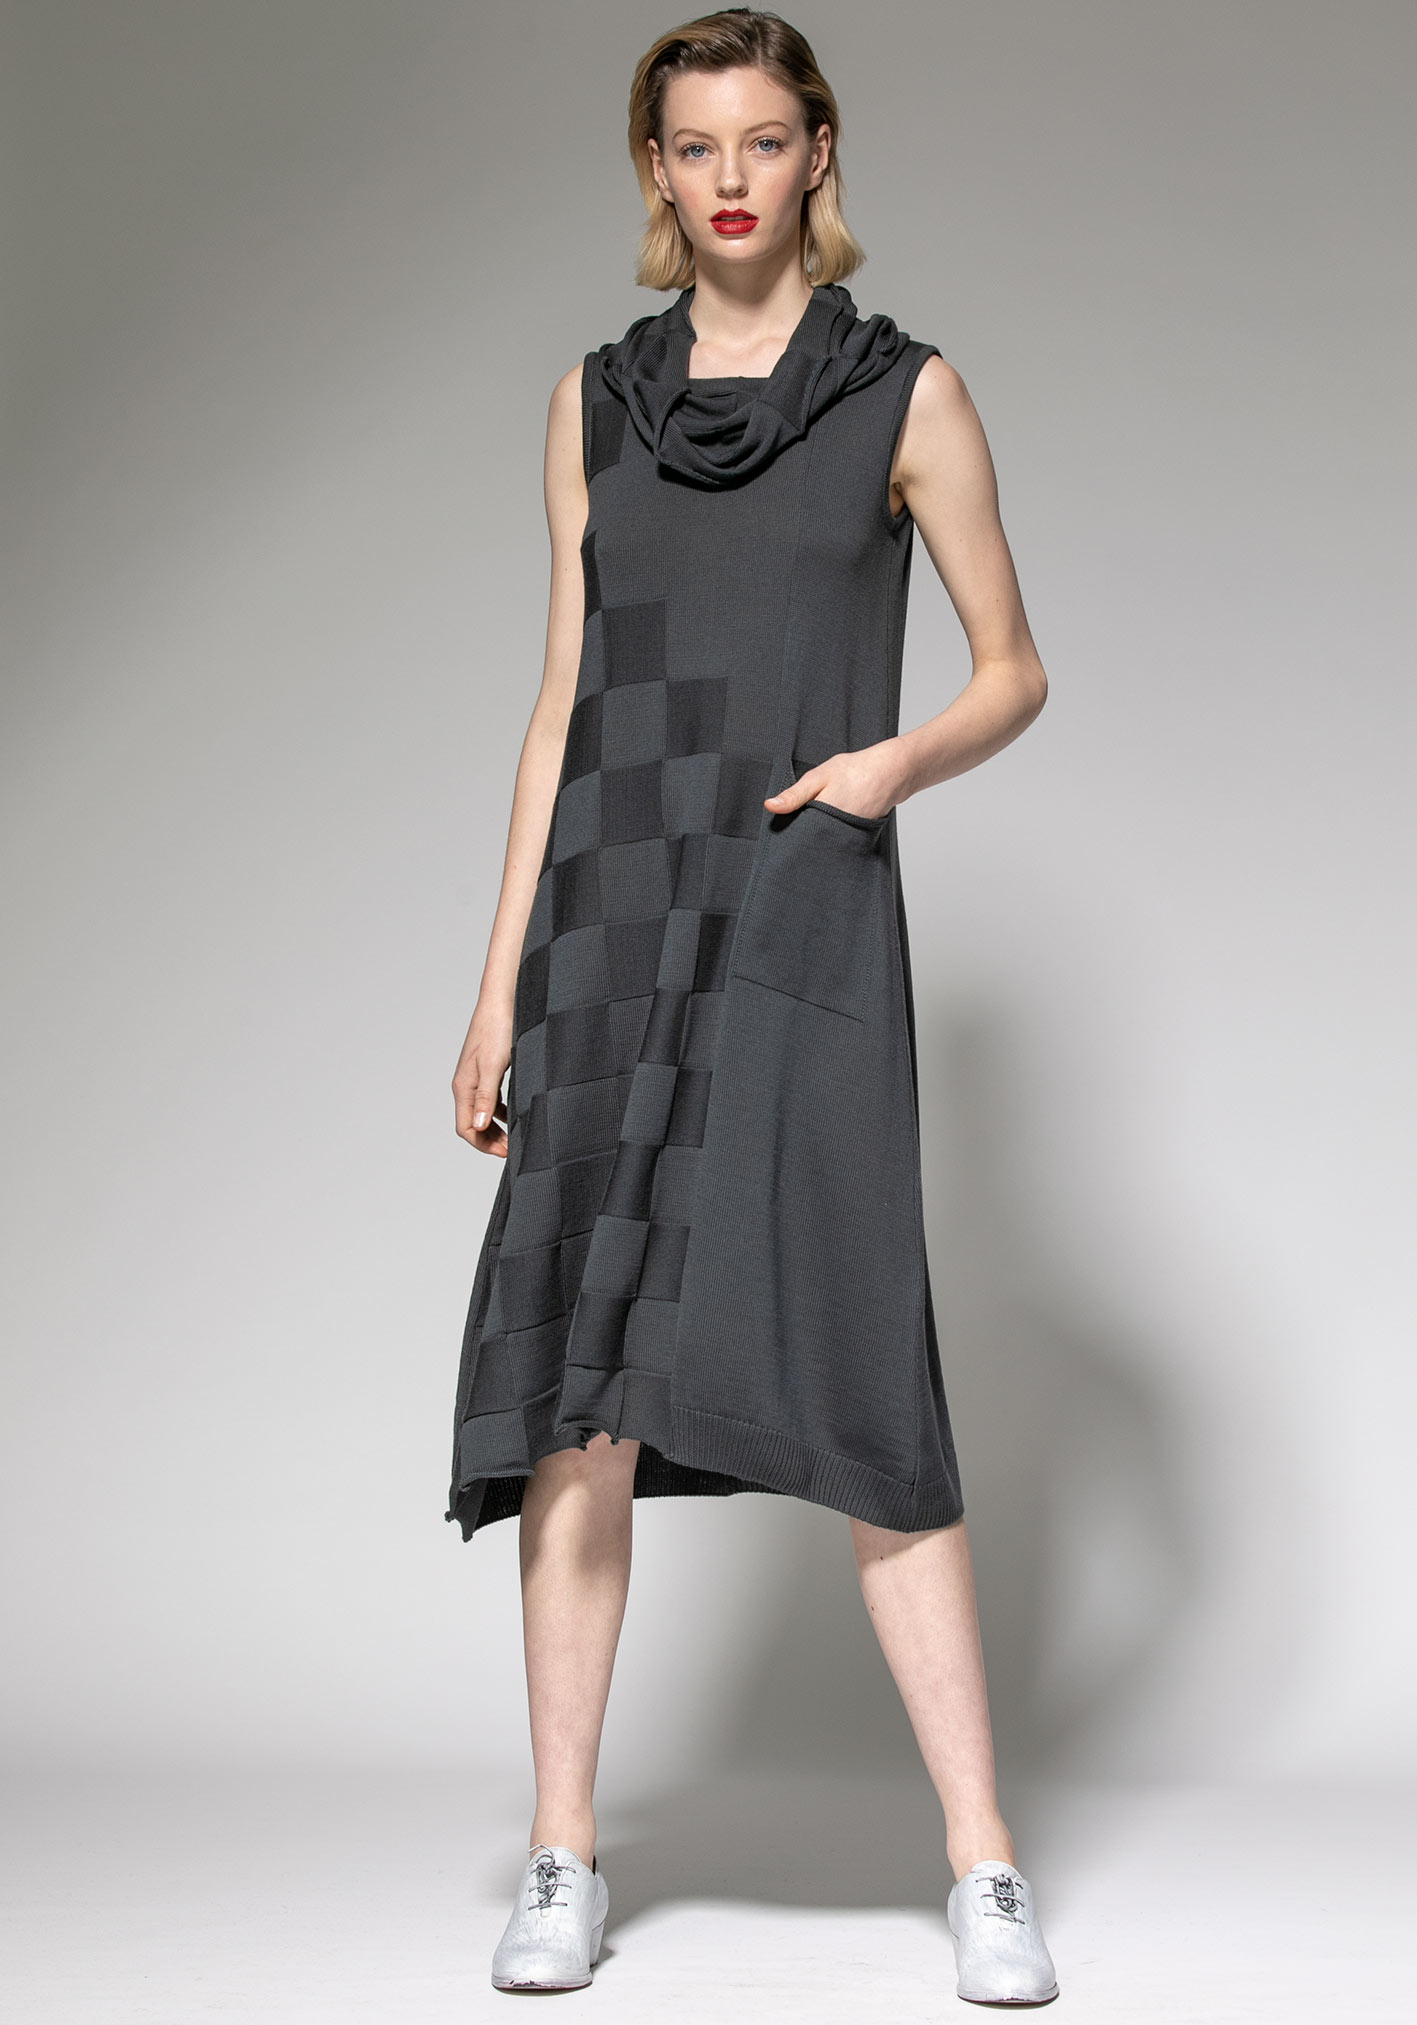 buy the latest Alternate Check Dress online